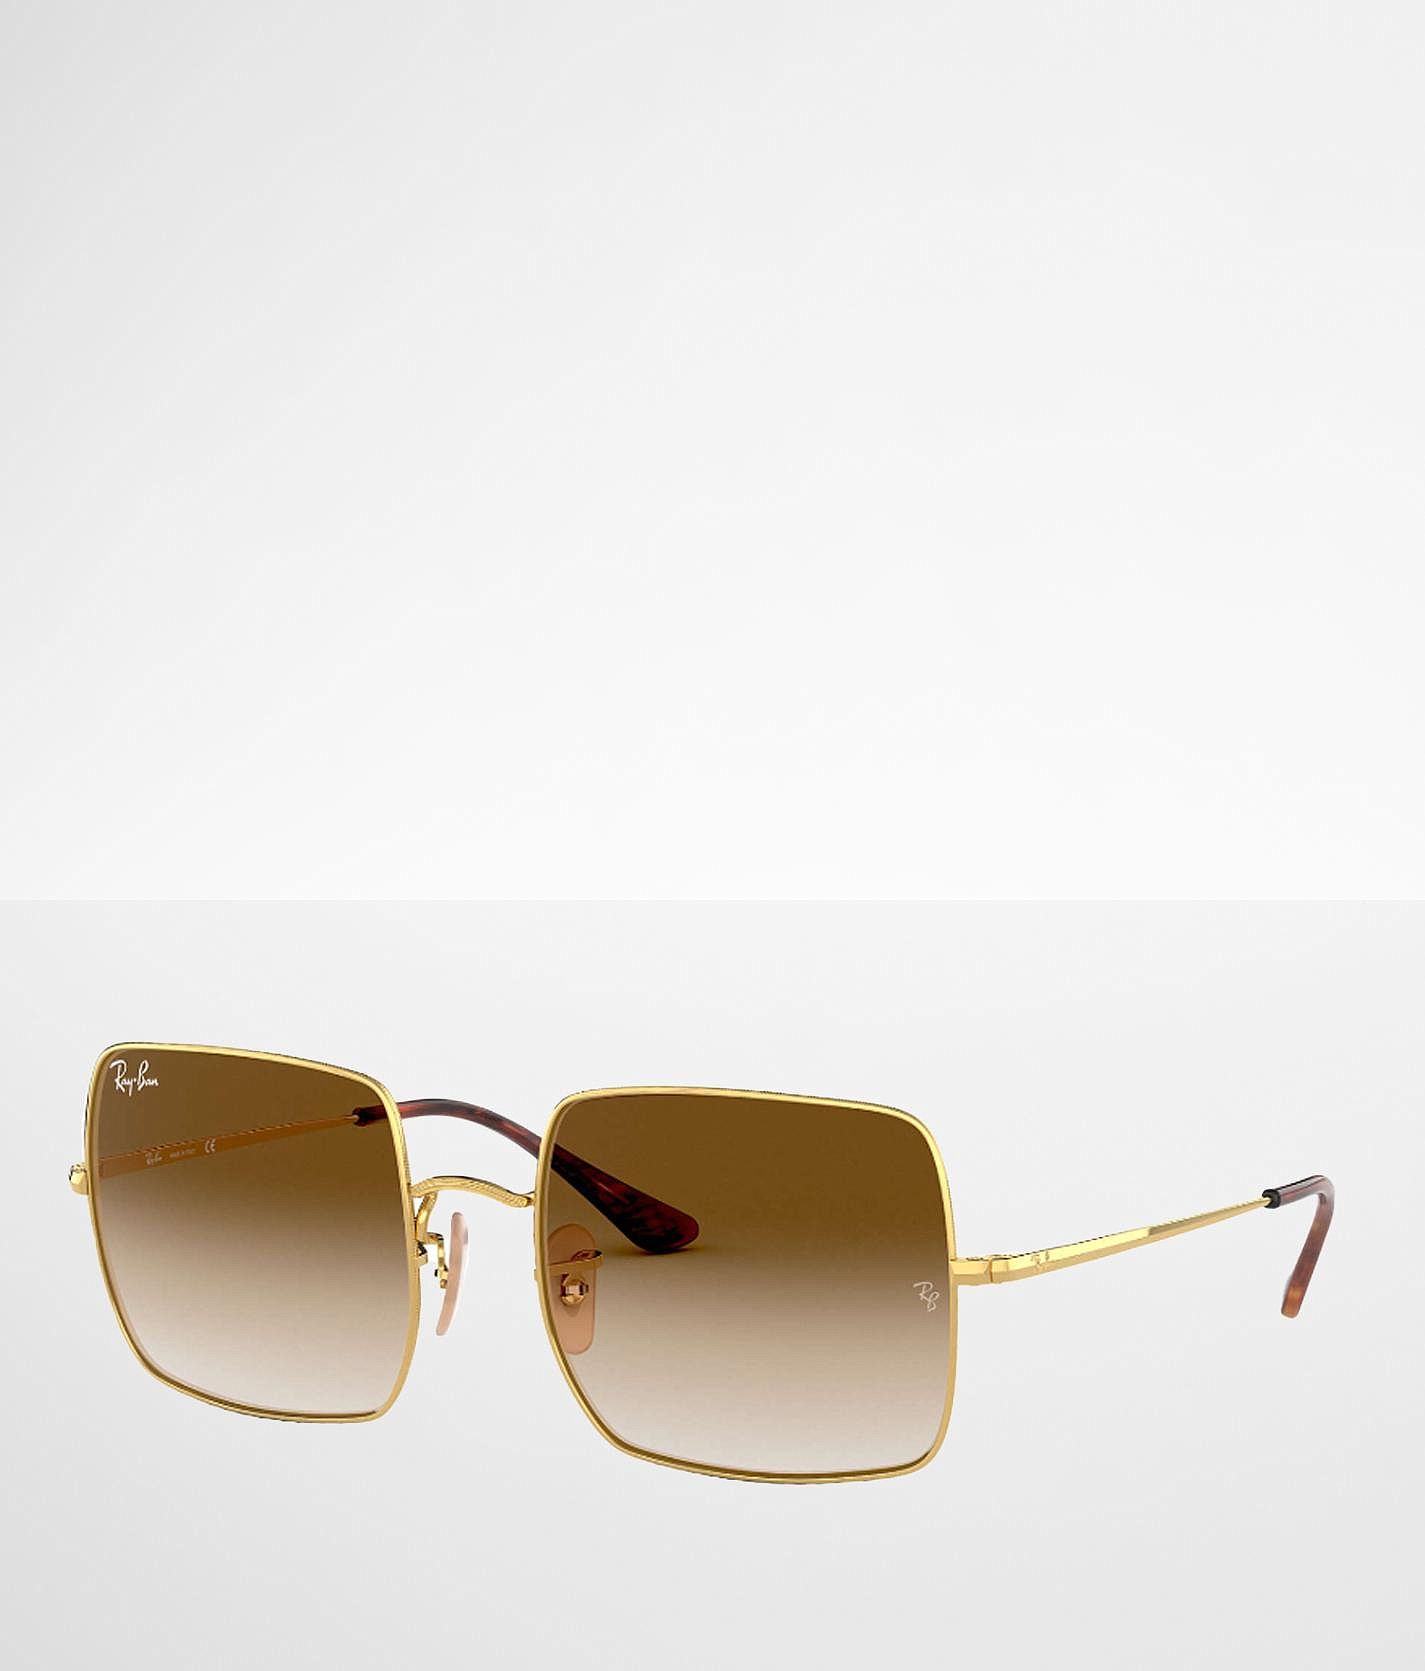 Ray-Ban Square Classic Gold Sunglasses